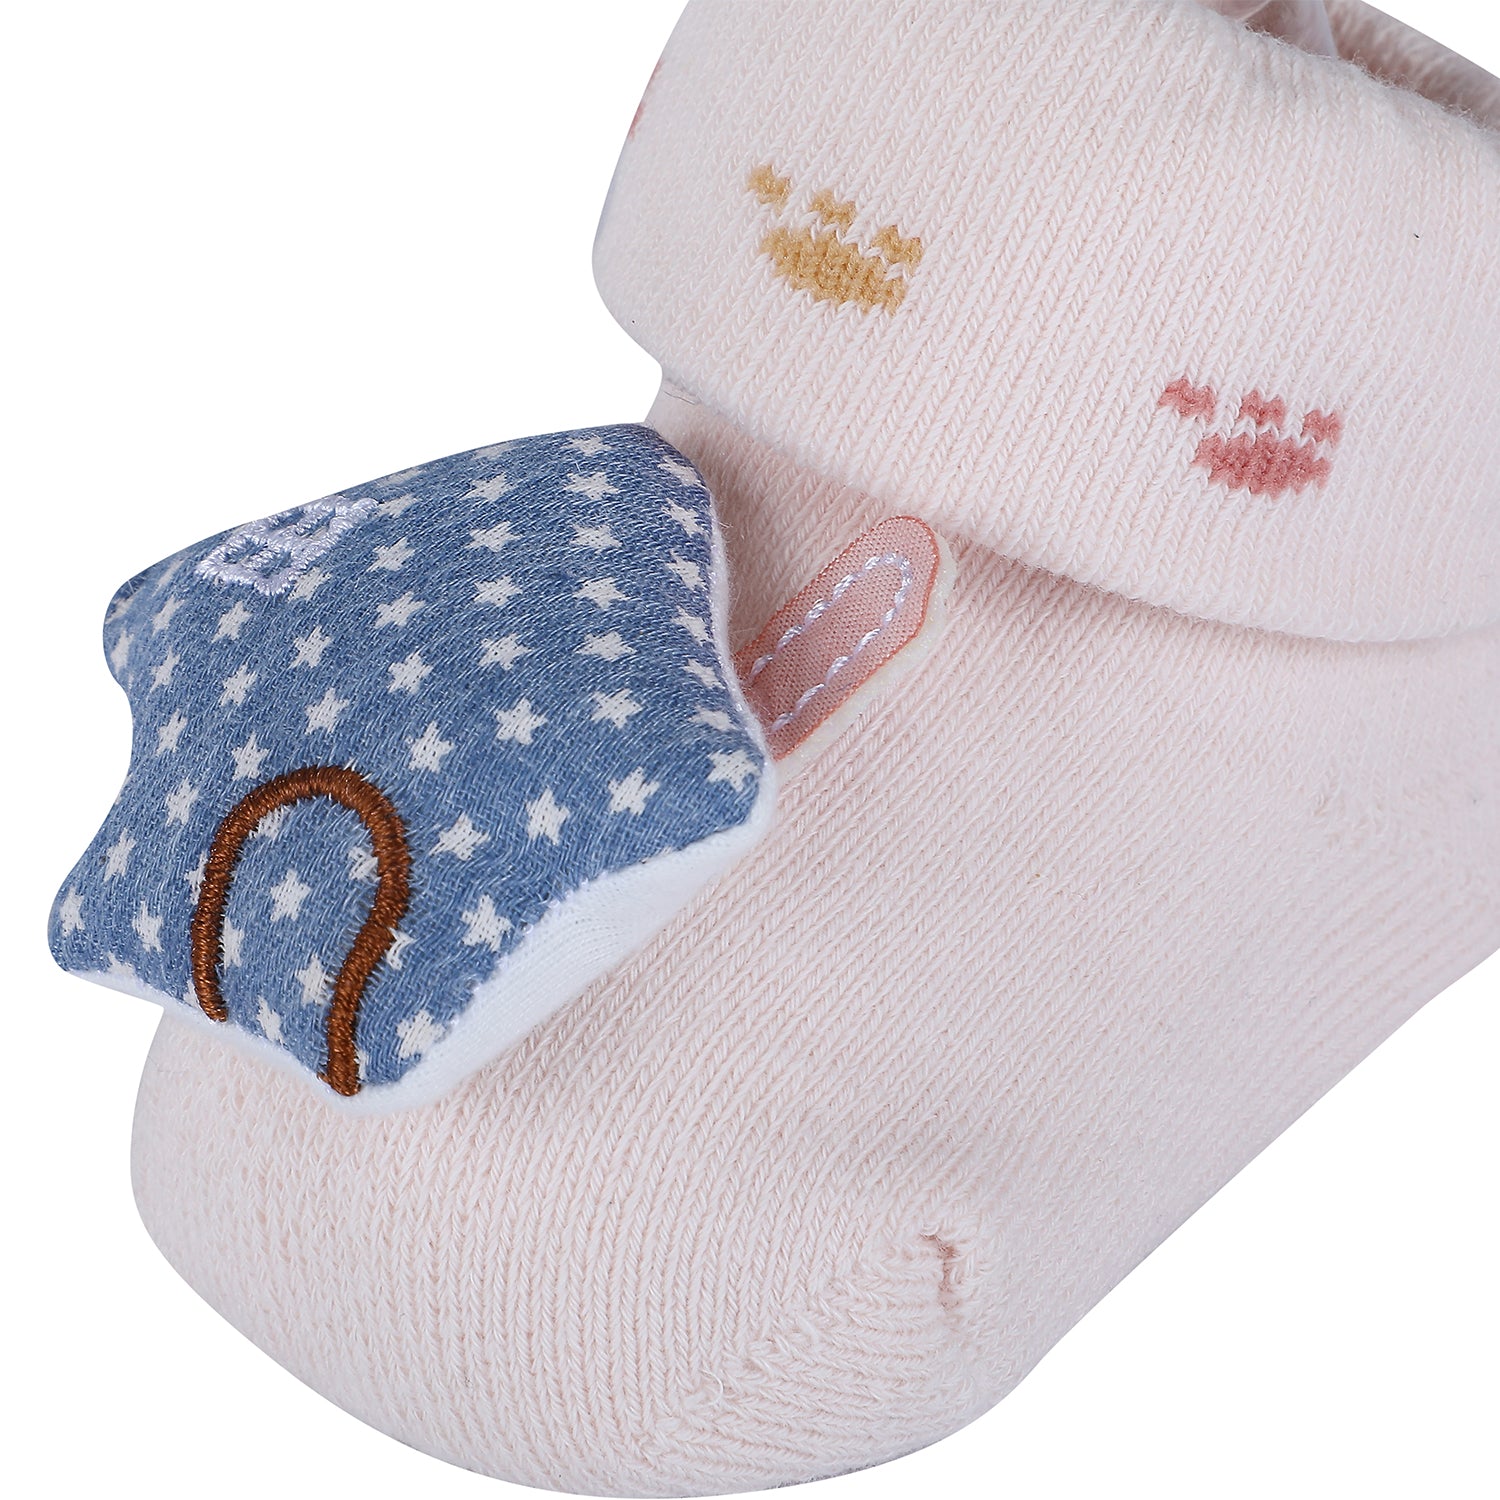 Baby Moo Star House Cotton Anti-Skid 3D Socks - Pink - Baby Moo